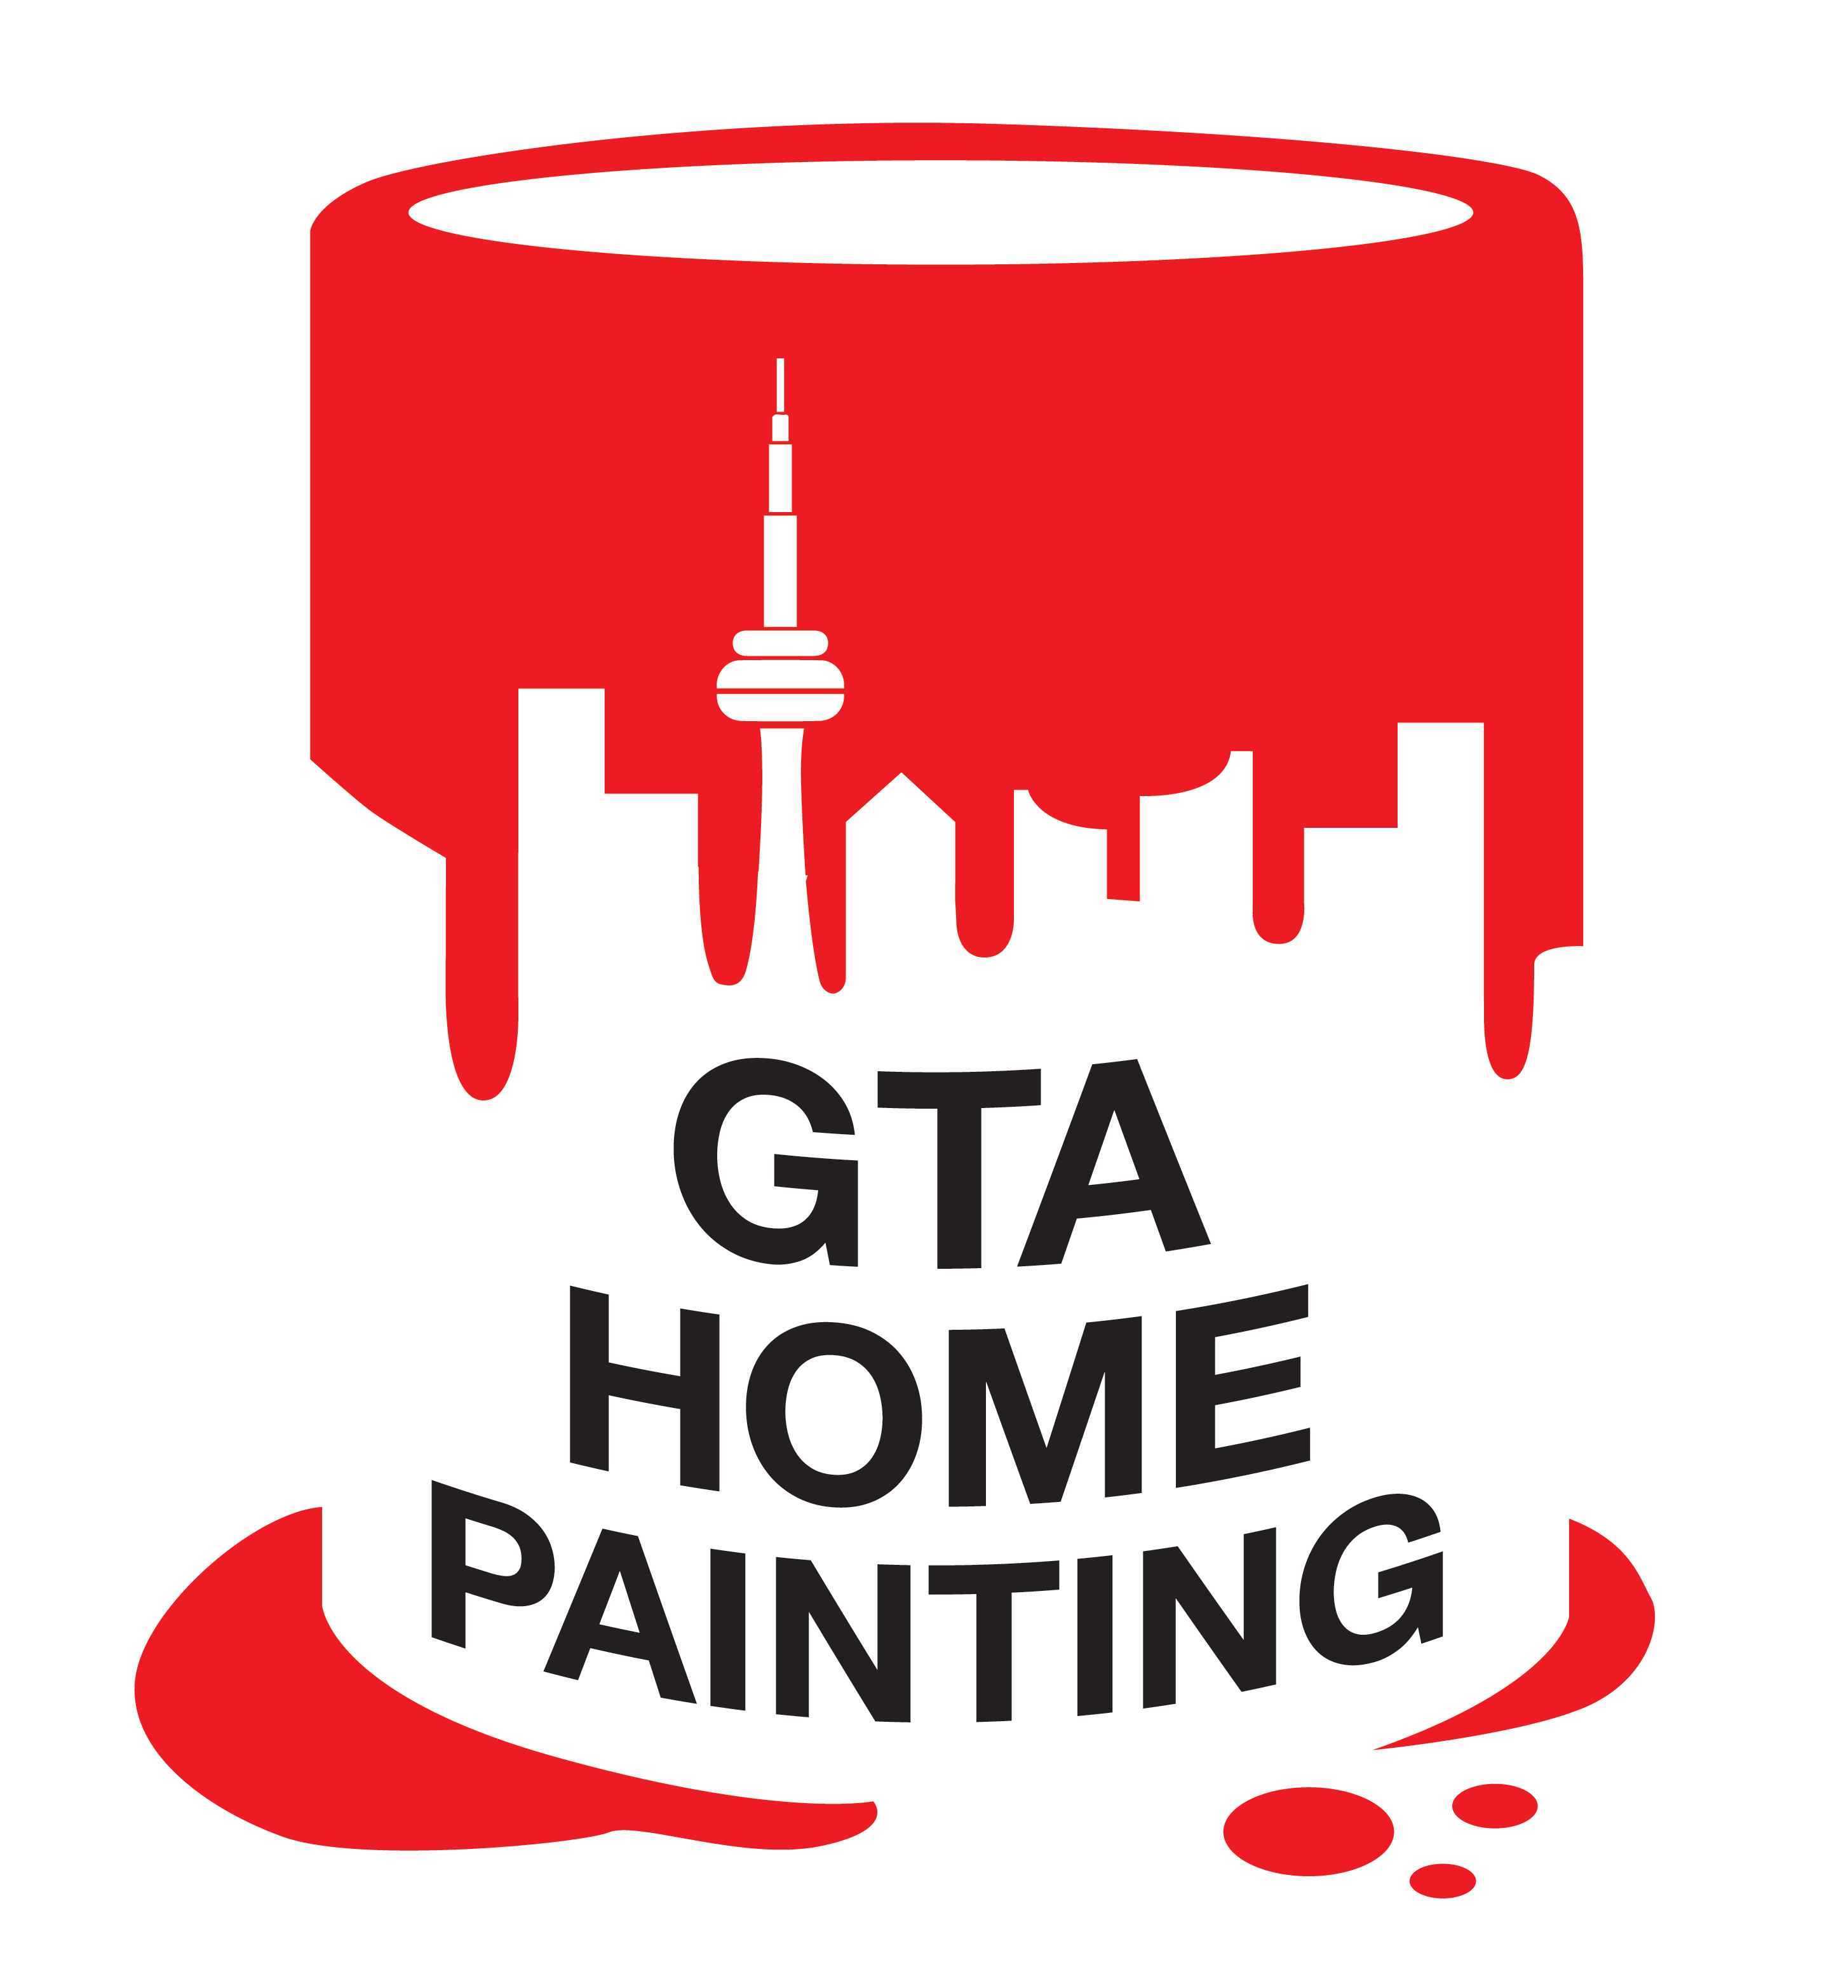 Gta Home Painting's logo